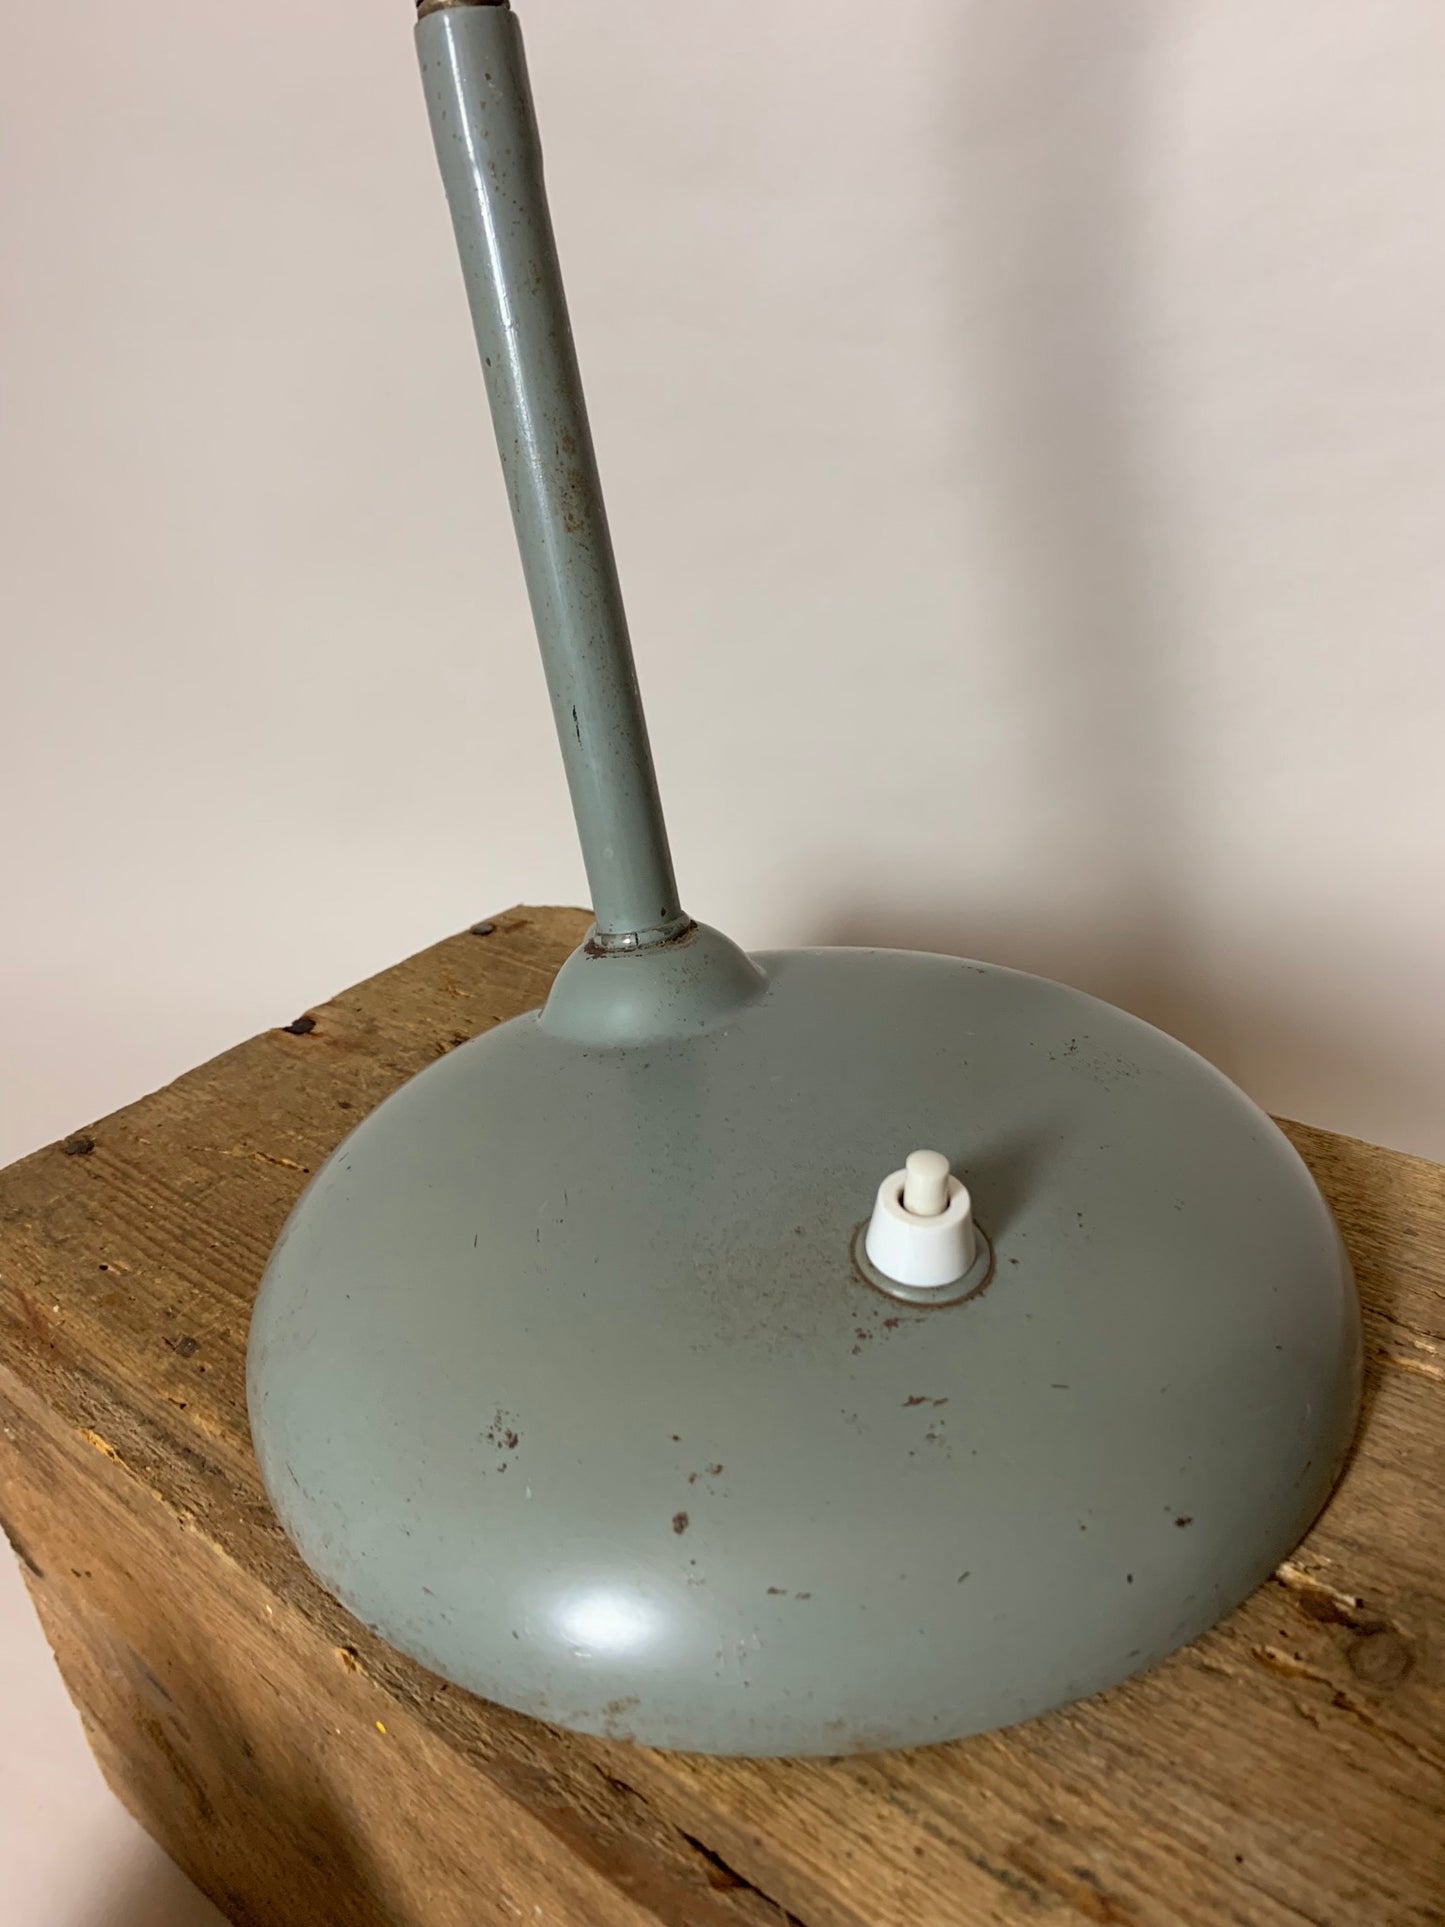 Lustige graue Hala Vintage-Lampe mit flexiblem Arm